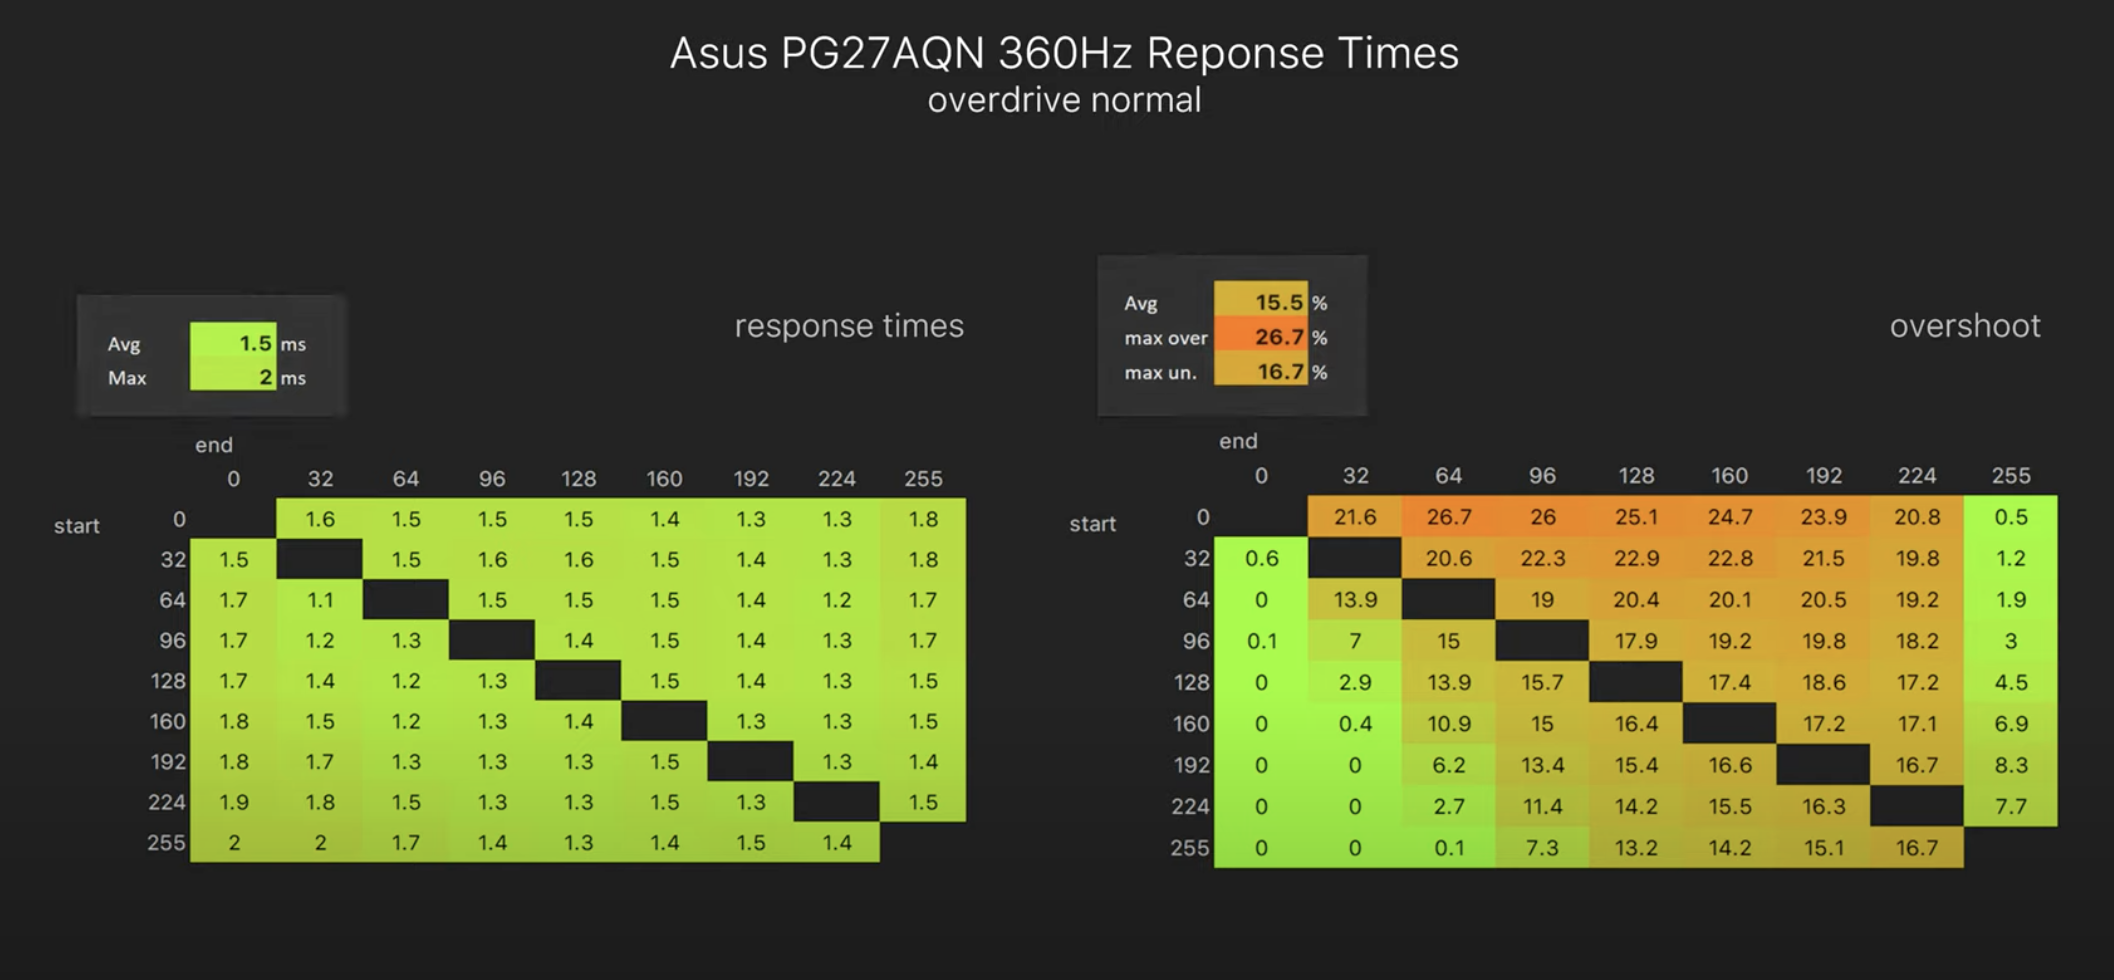 Response Times - Asus PG27AQN